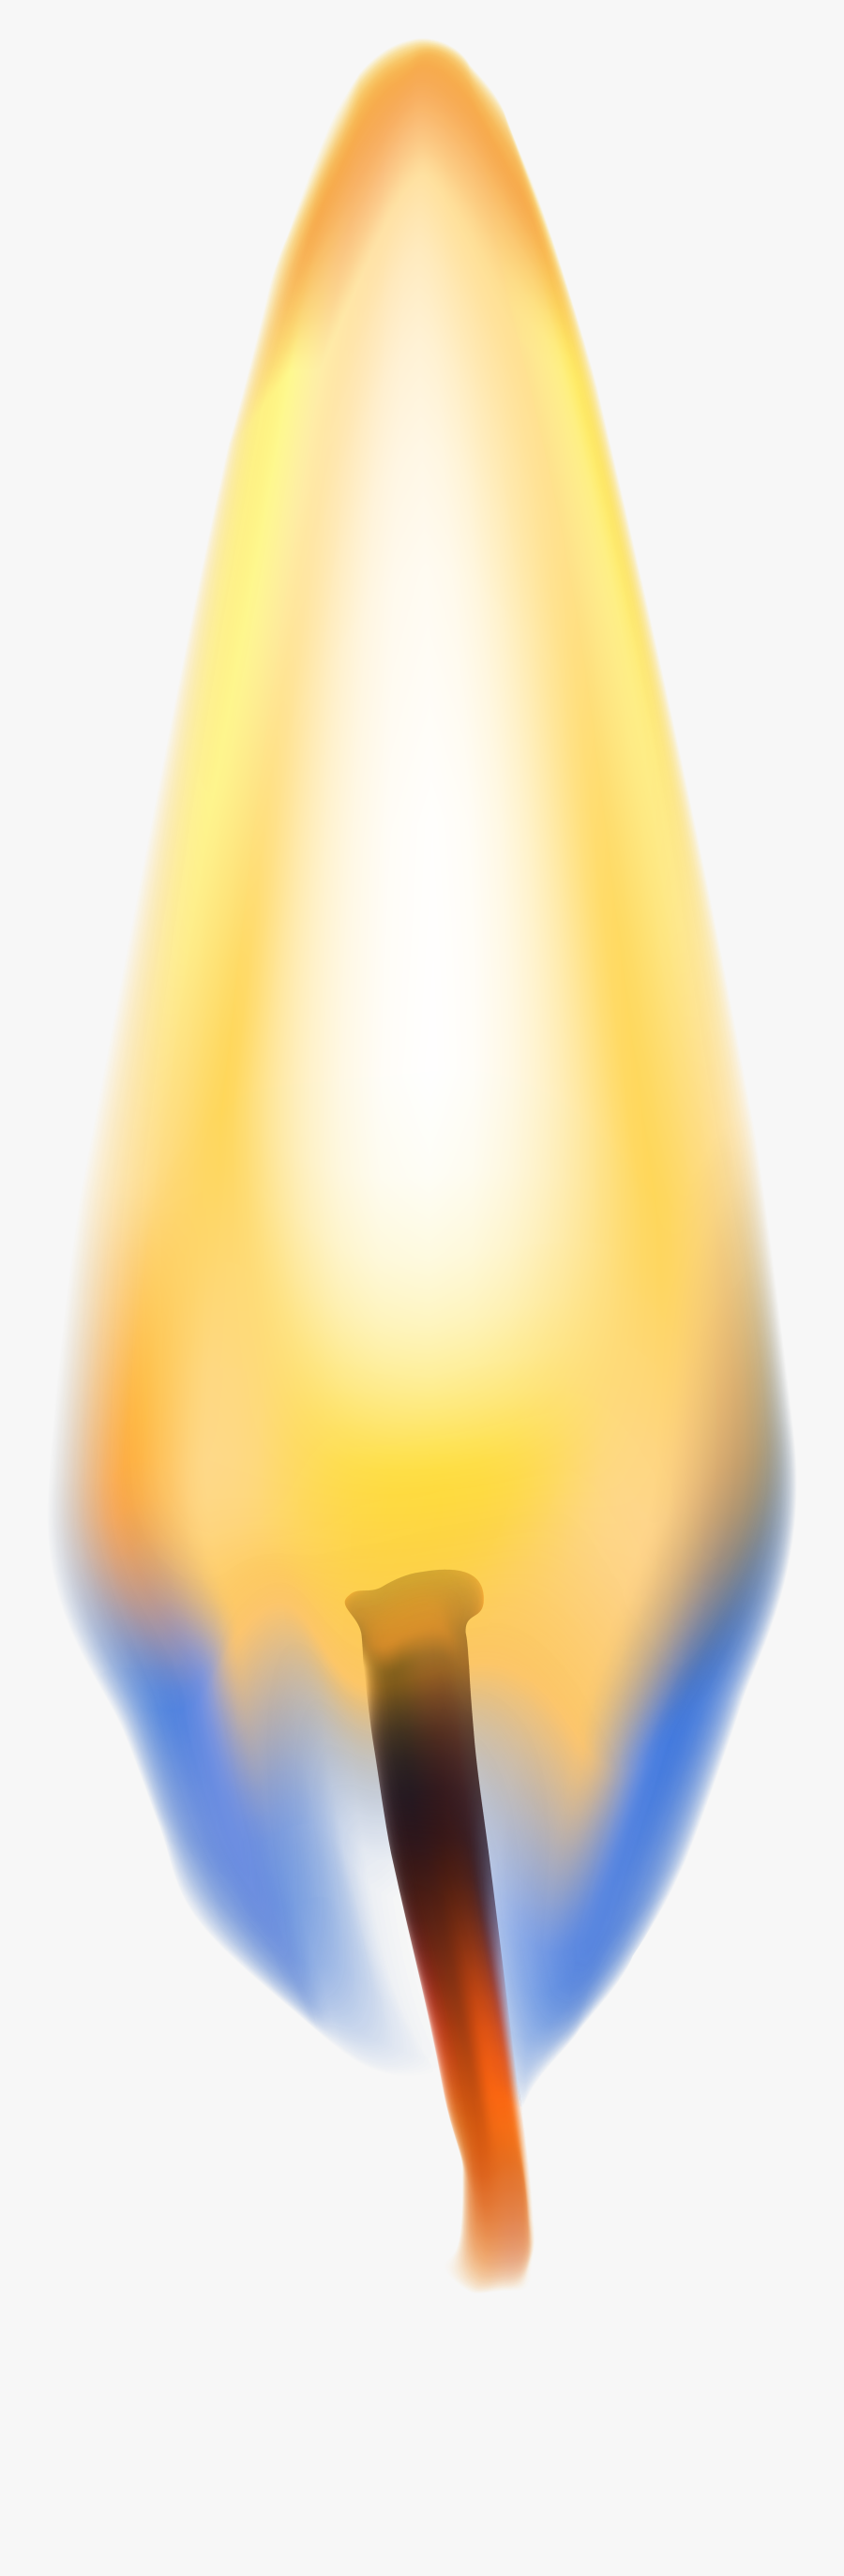 Candle Flame Transparent Png Clip Art Image - Candle Flame Transparent